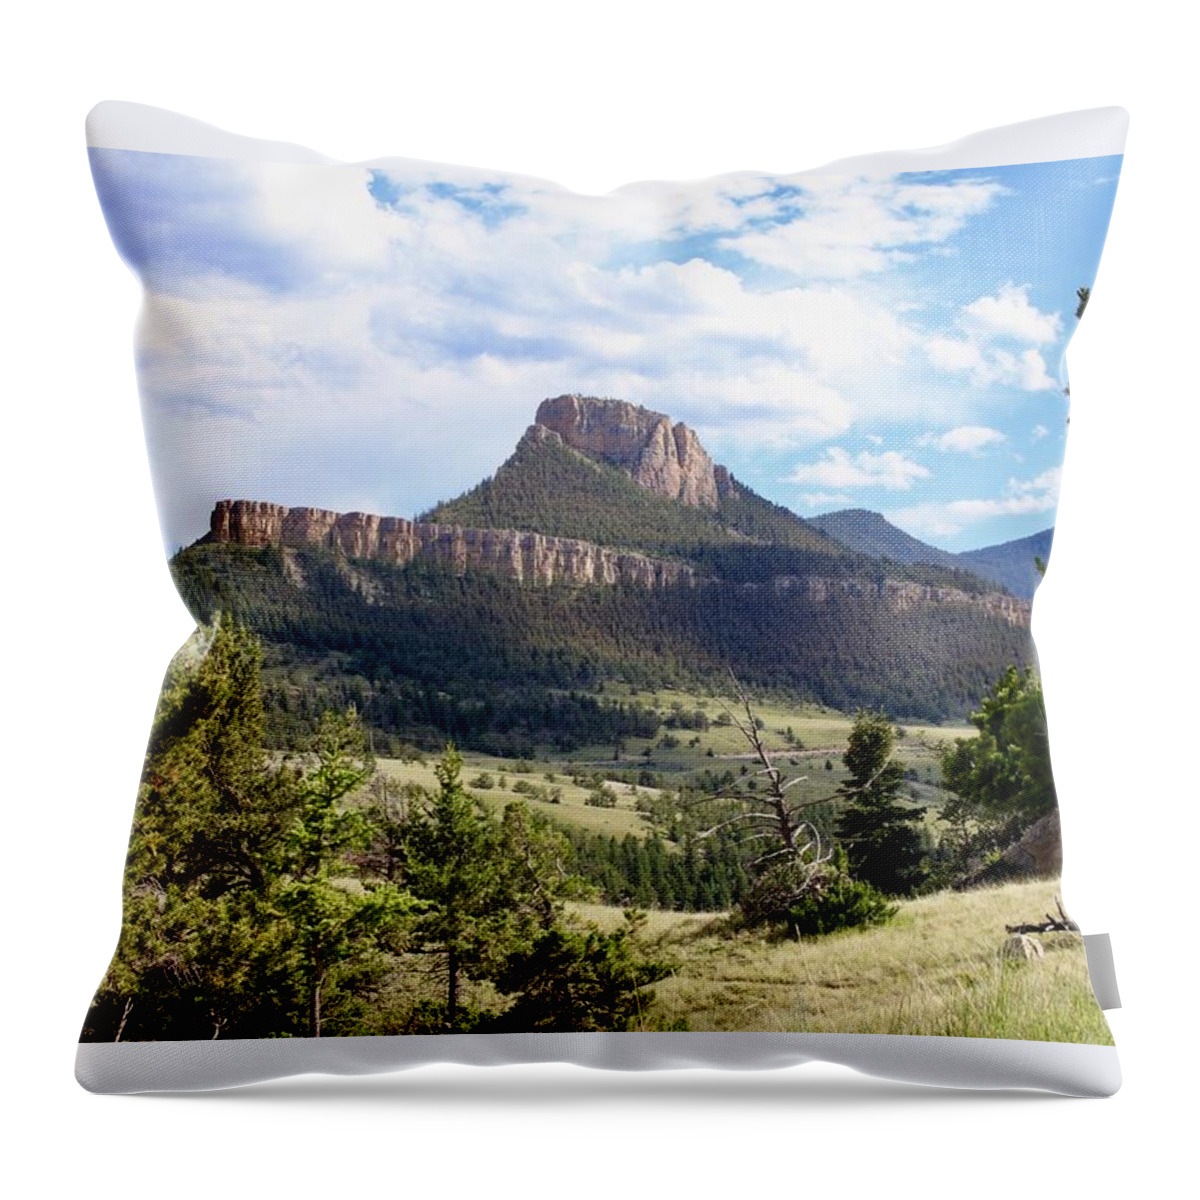 Mountain Throw Pillow featuring the photograph Wrap Around Mountain by Yvonne M Smith